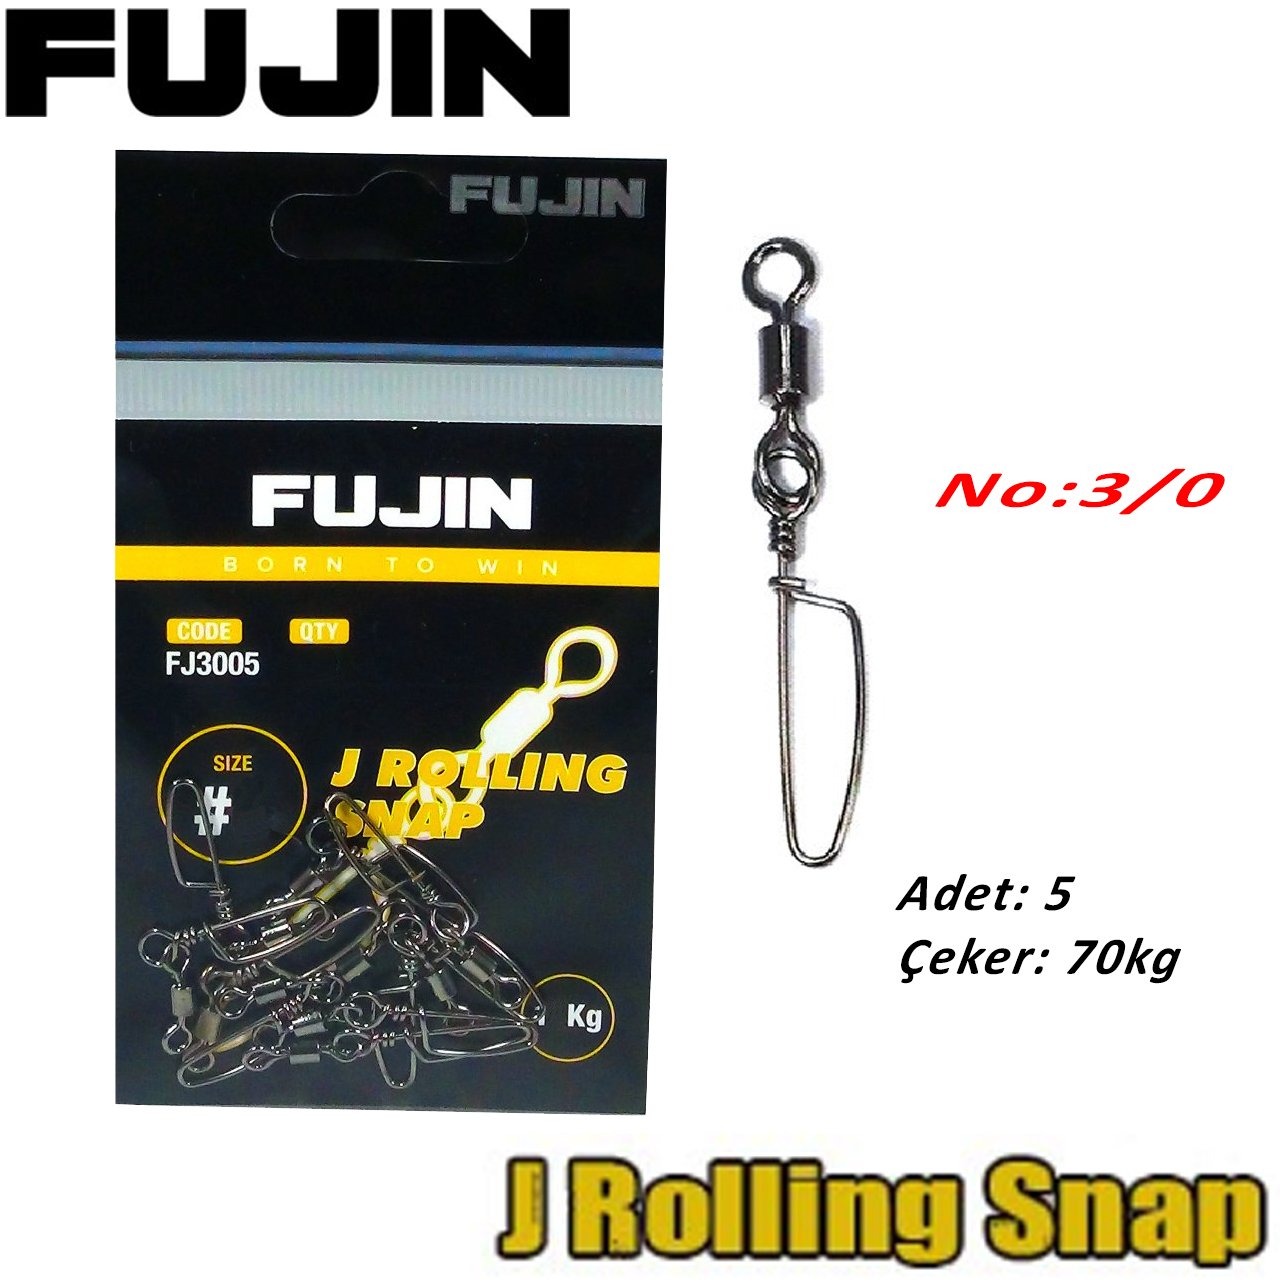 Fujin ''J ROLLING SNAP'' No:3/0 - 70kg